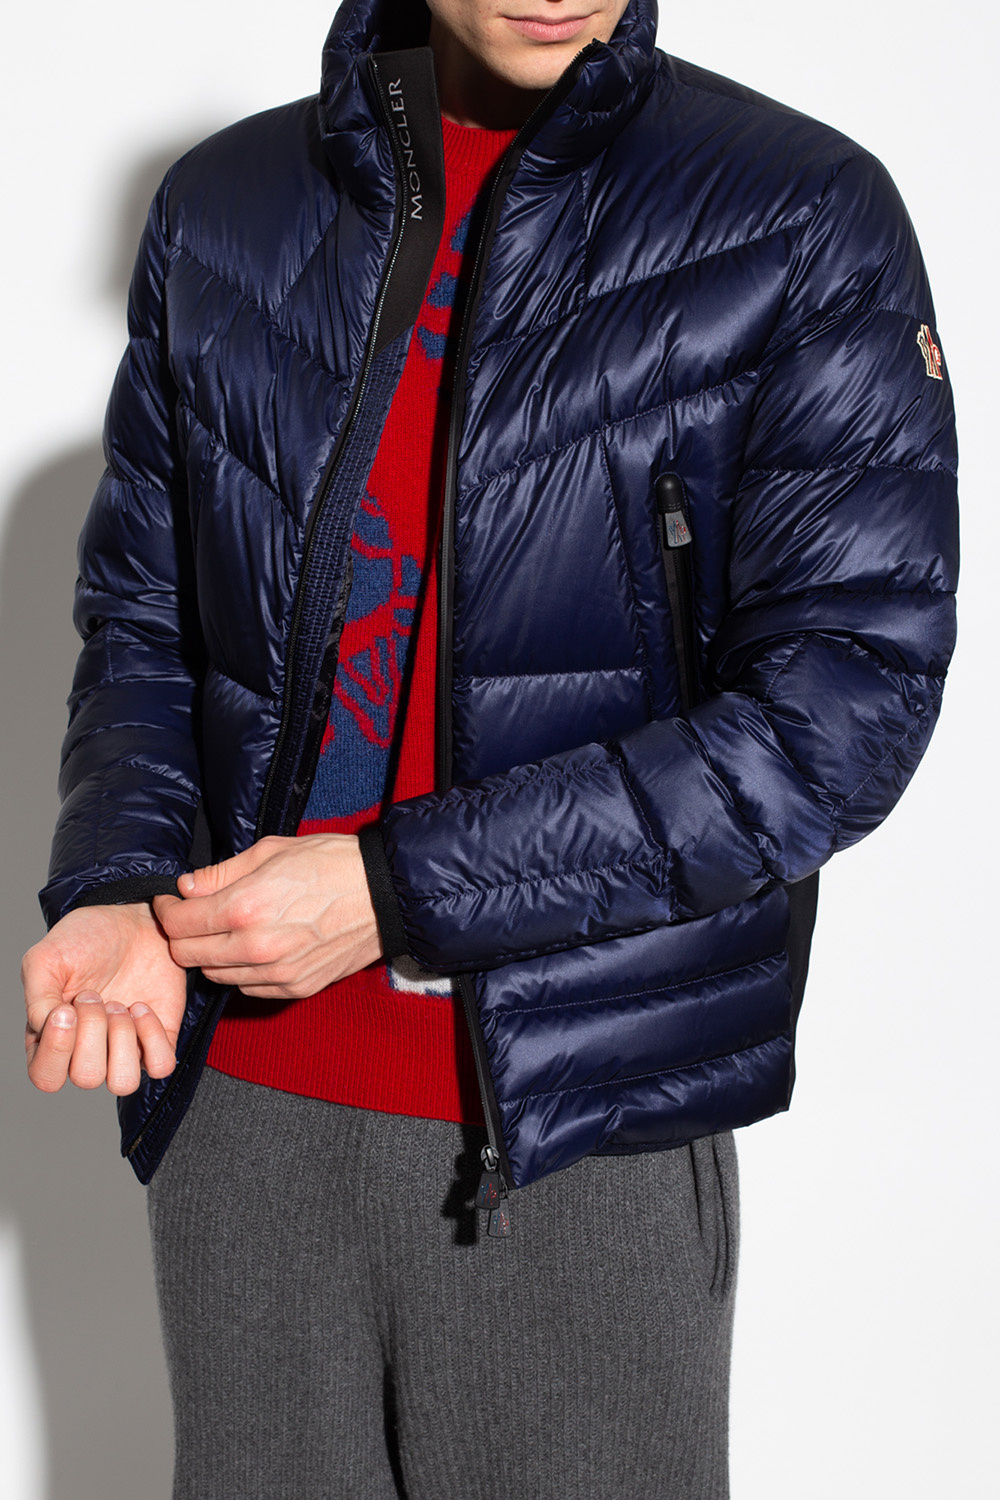 Moncler Grenoble 'Canmore' down jacket | Men's Clothing | Vitkac